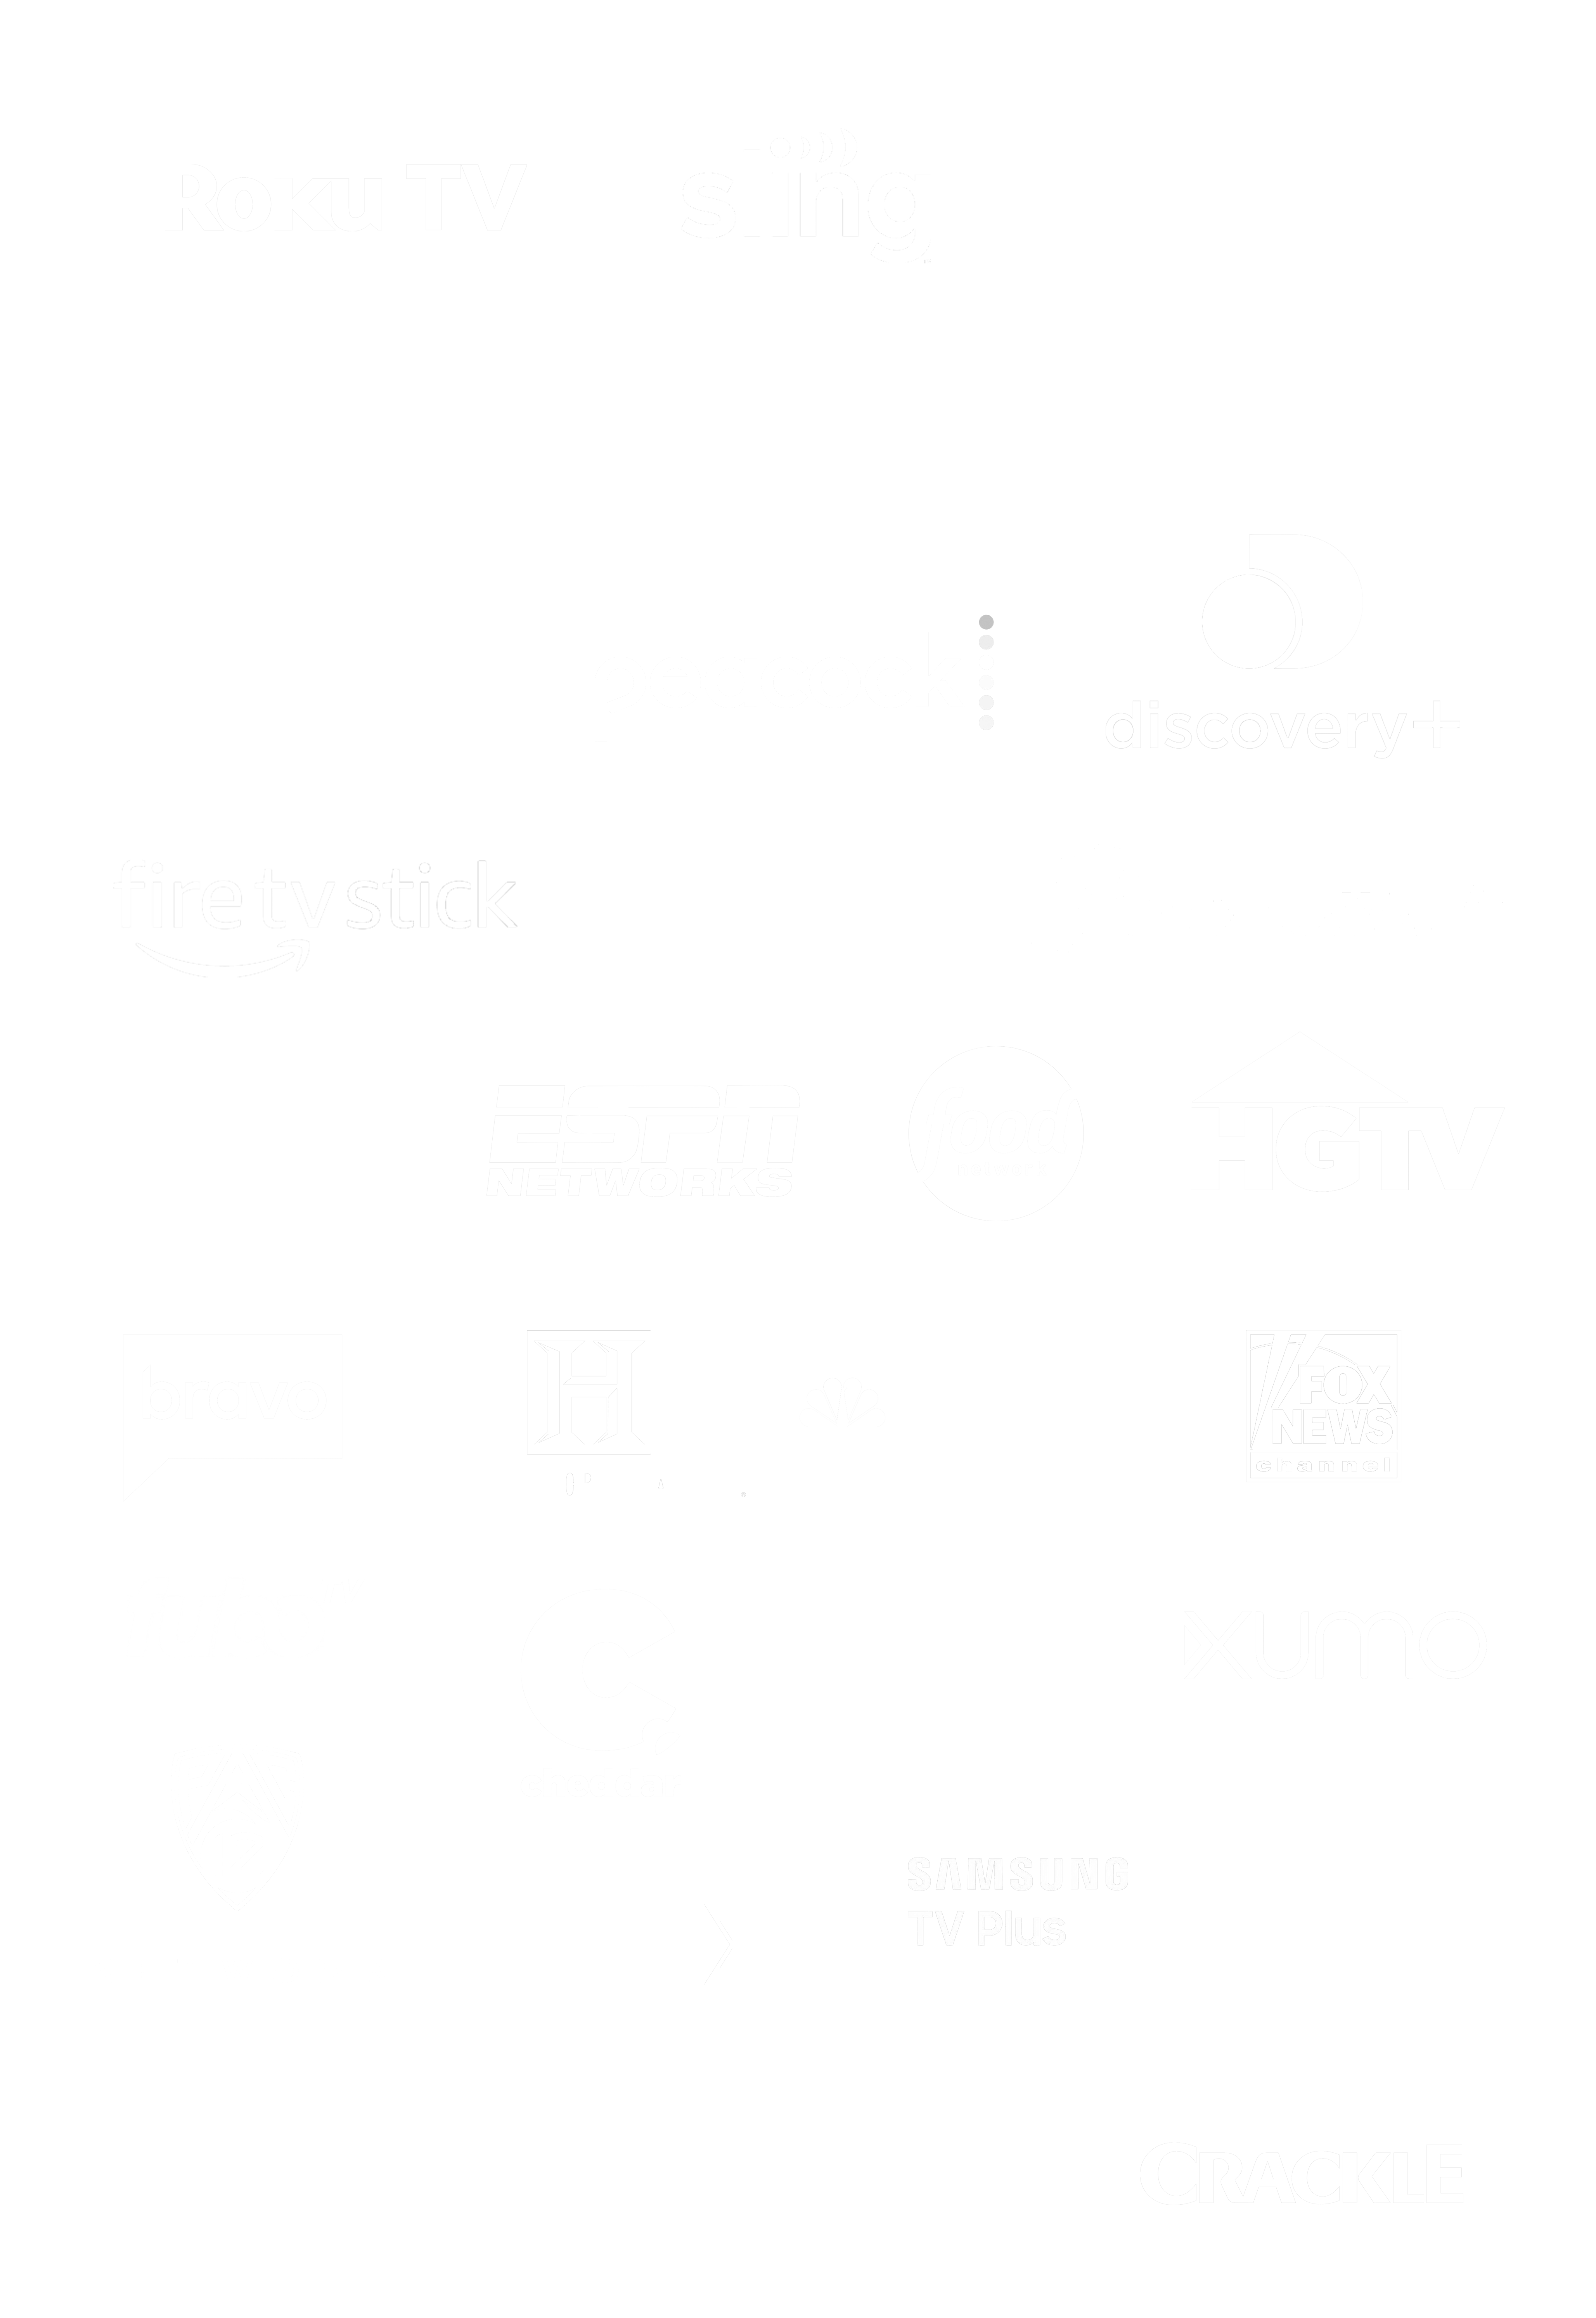 video plus marketplace logos